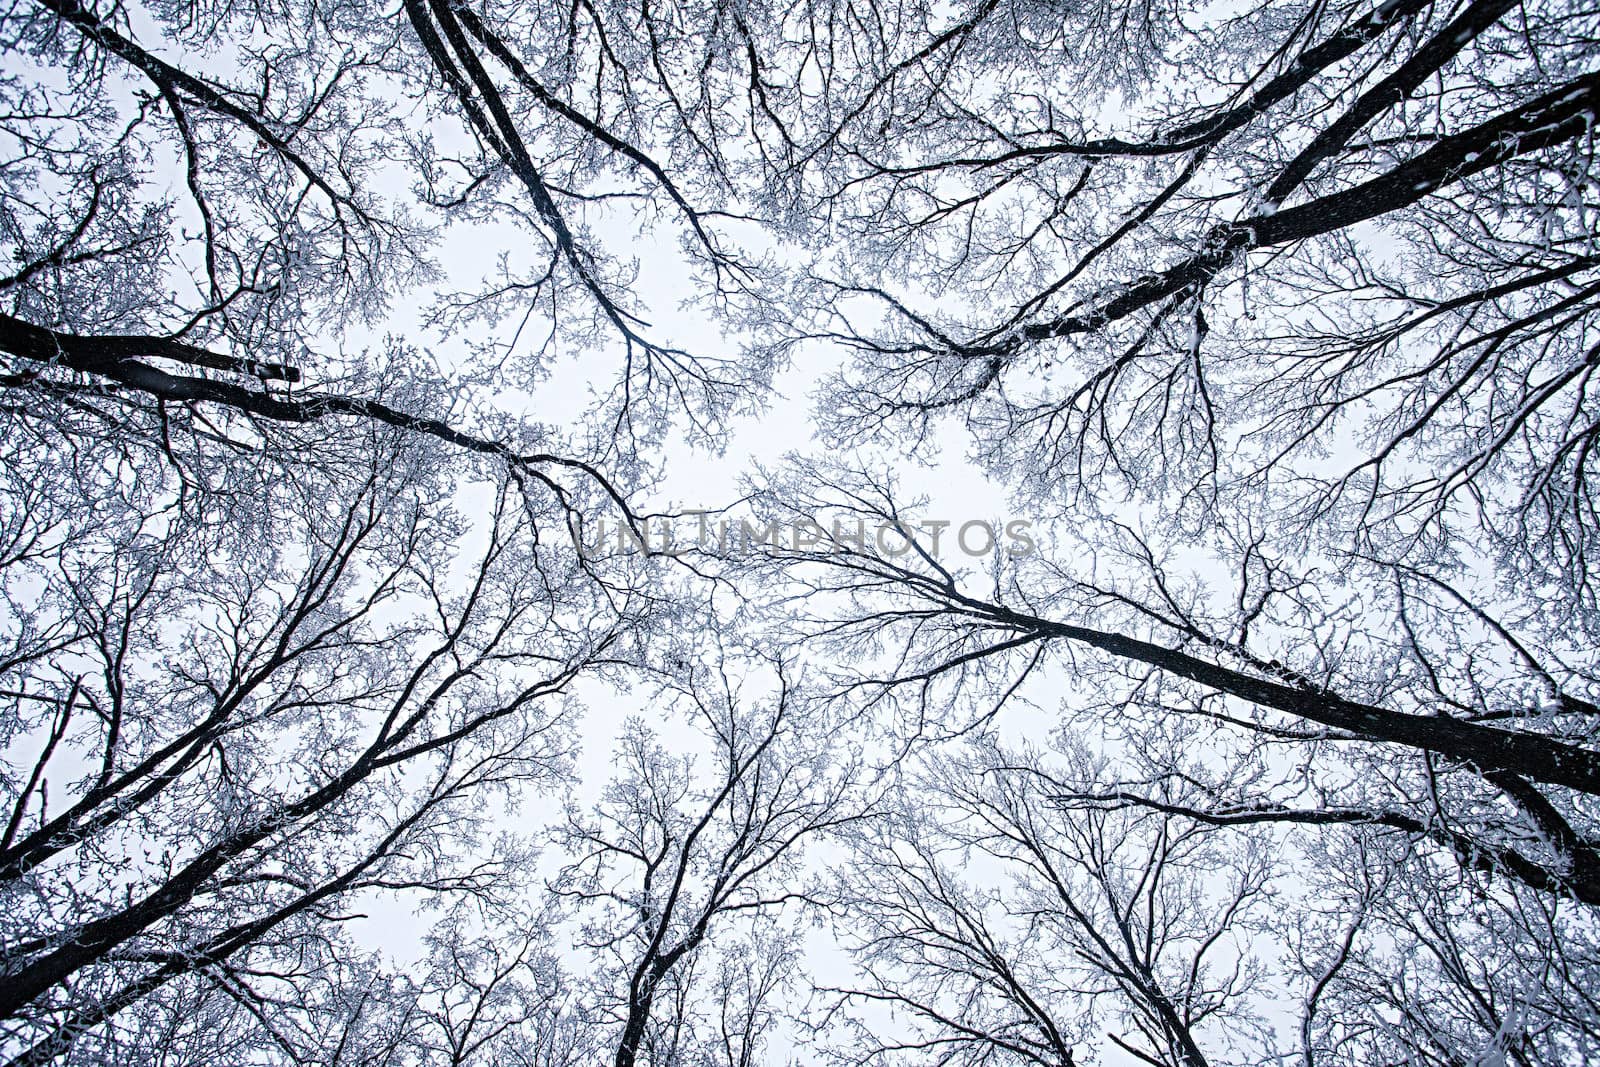  winter forest by palinchak